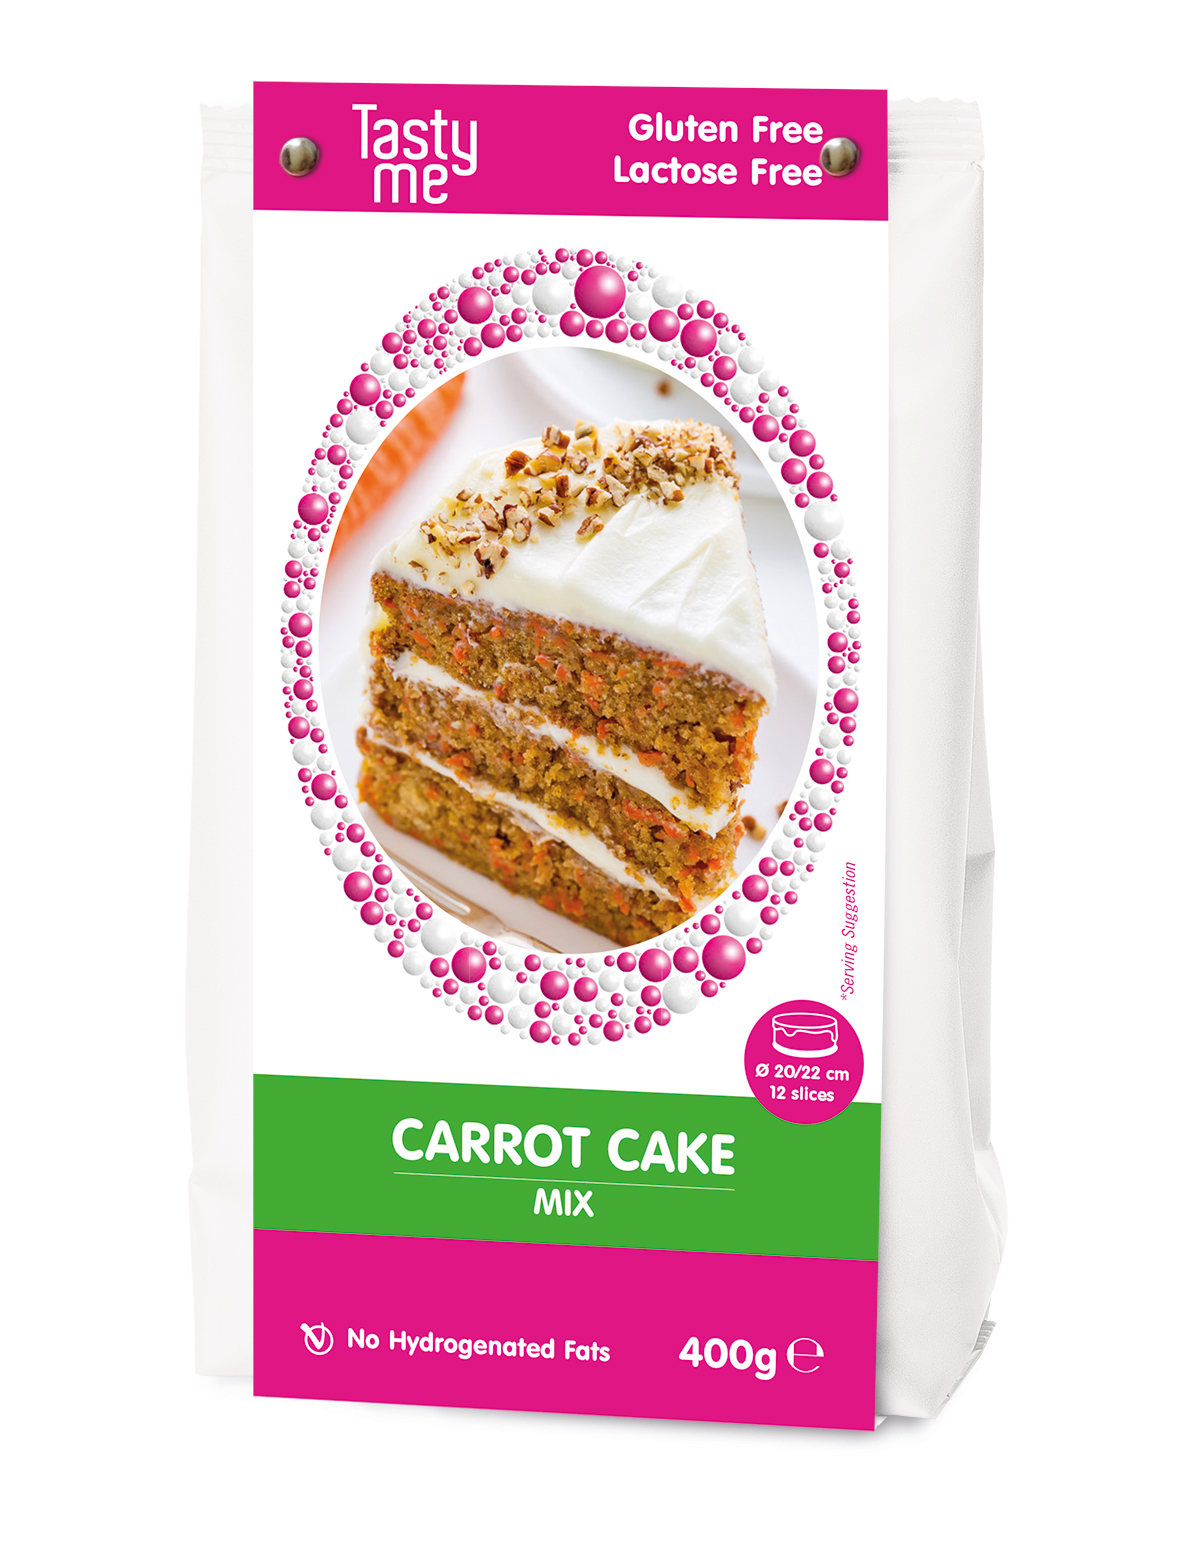 Carrot cake mix 400g - gluten-free 